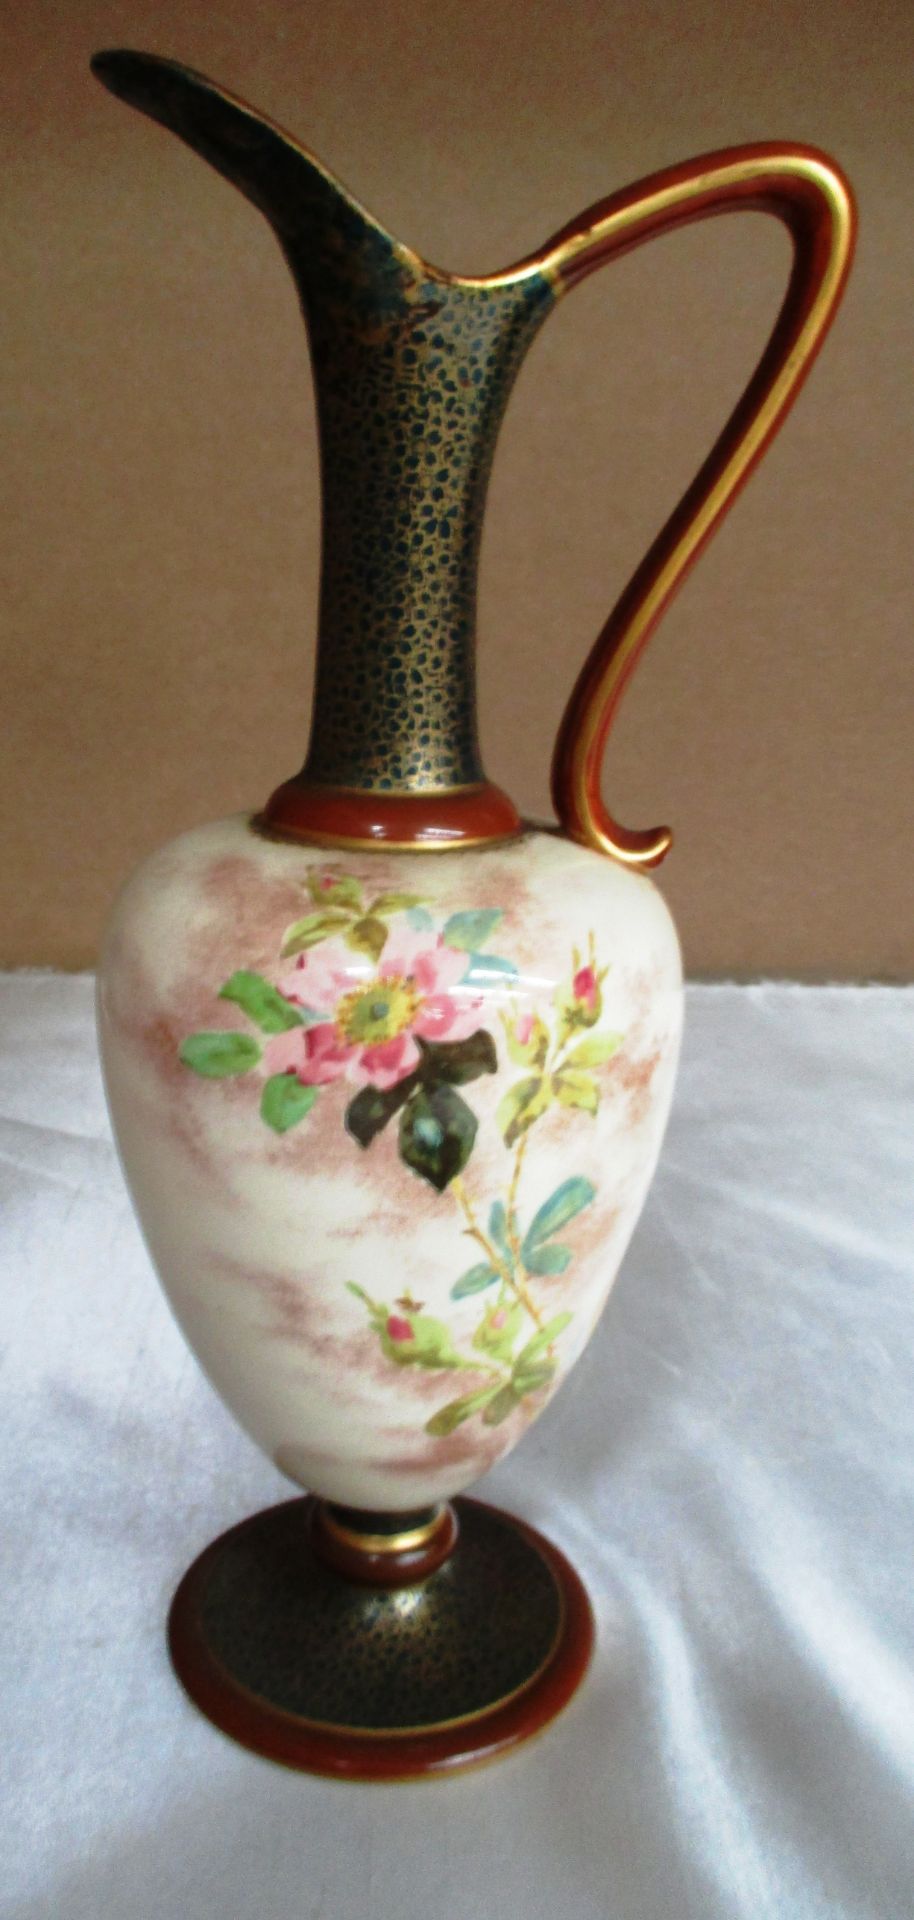 A Doulton Burslem handled jug with floral decoration